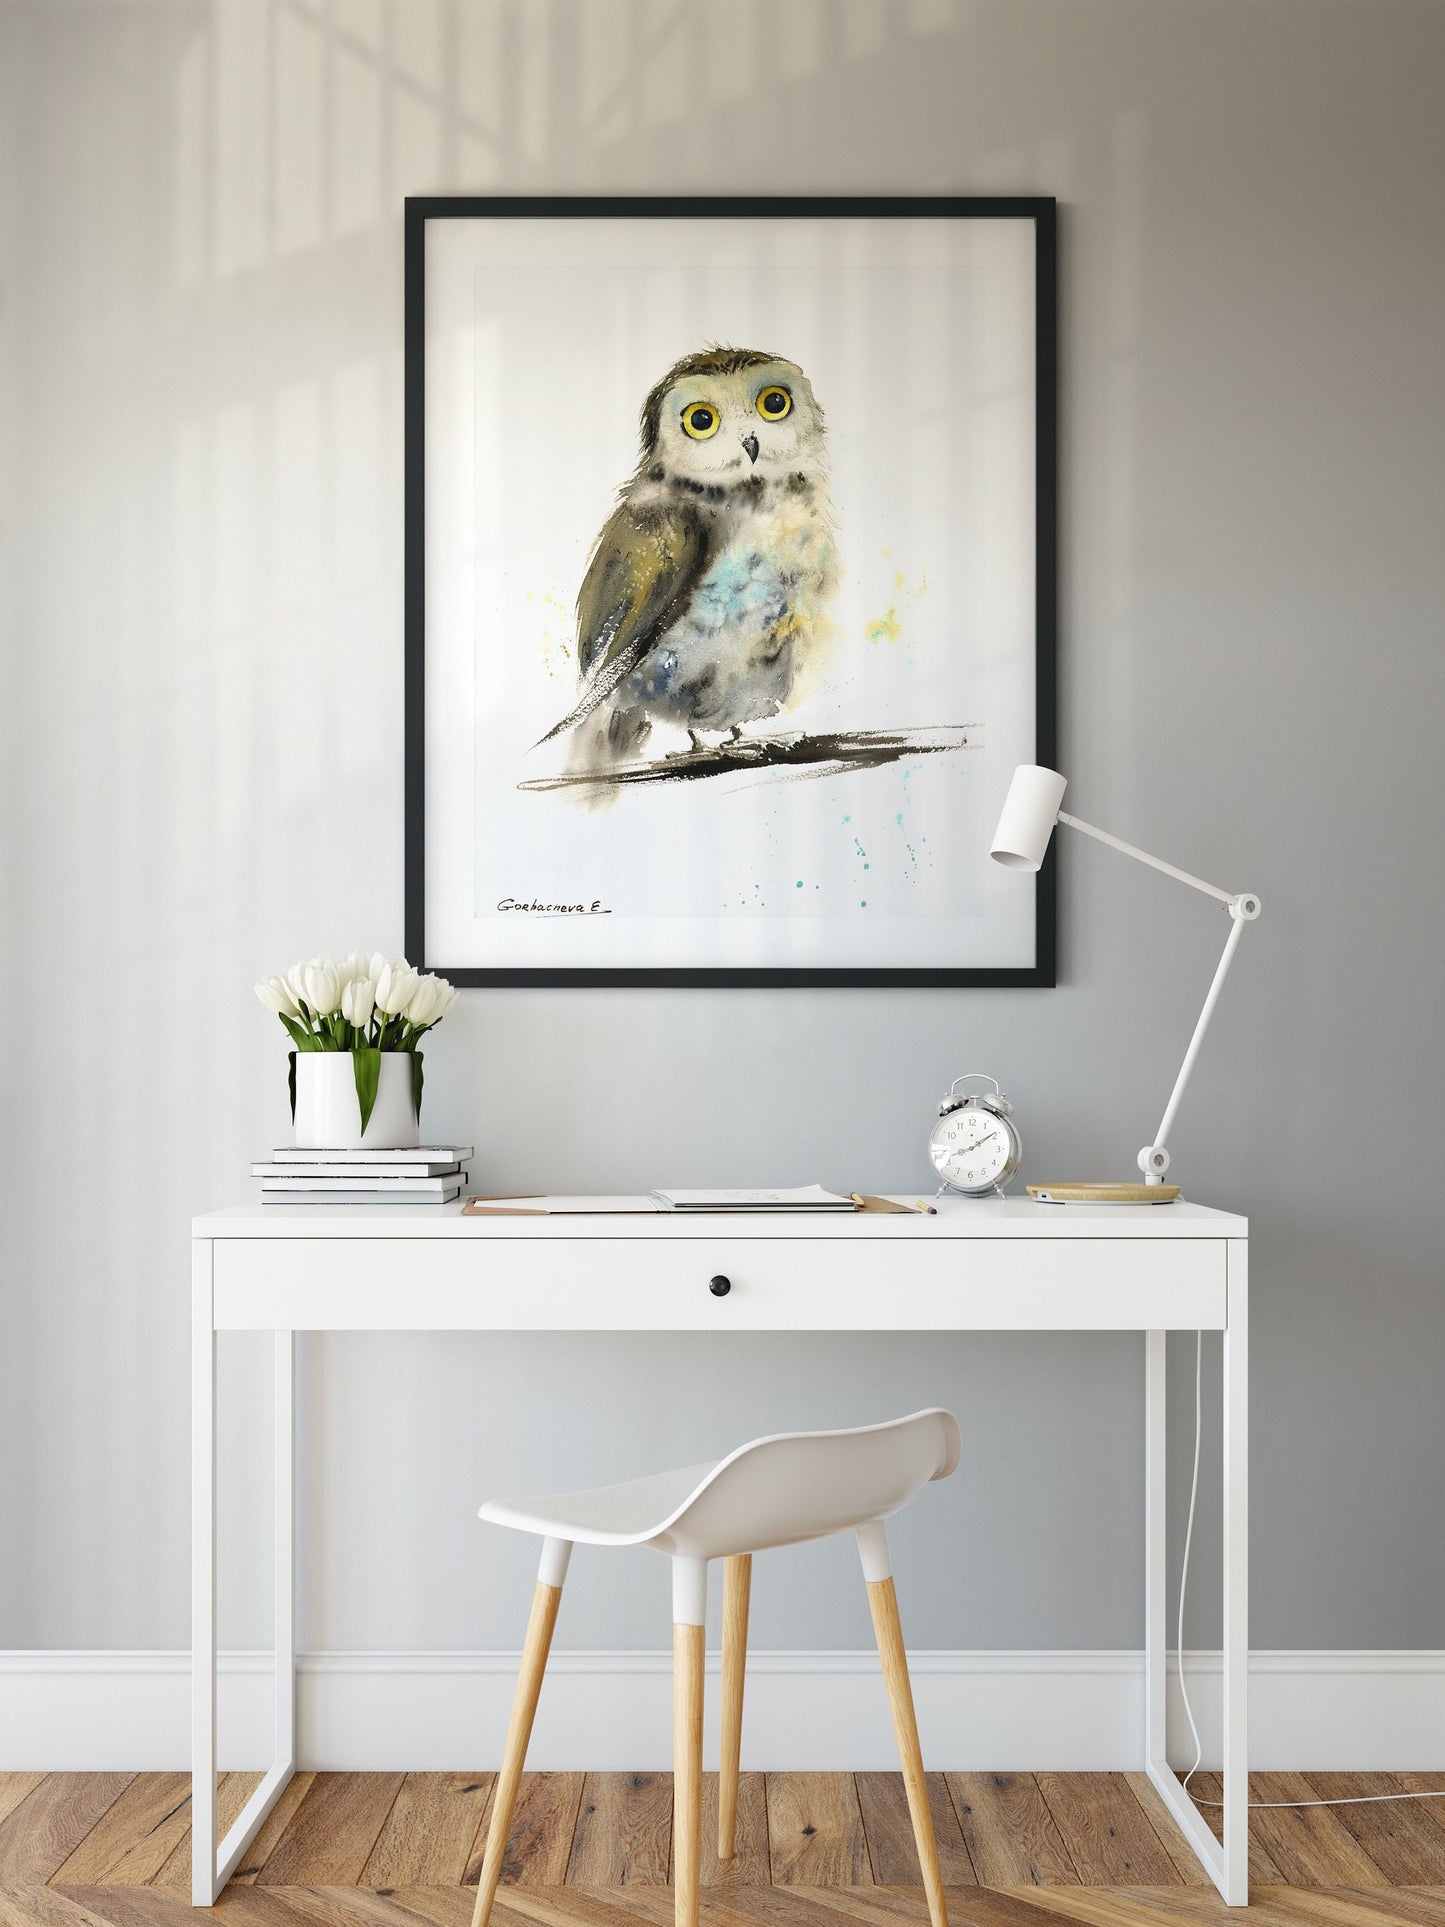 Watercolor Illustration Owl Print, Nursery Art Decor, Wall Decoration, Bird Lovers Art